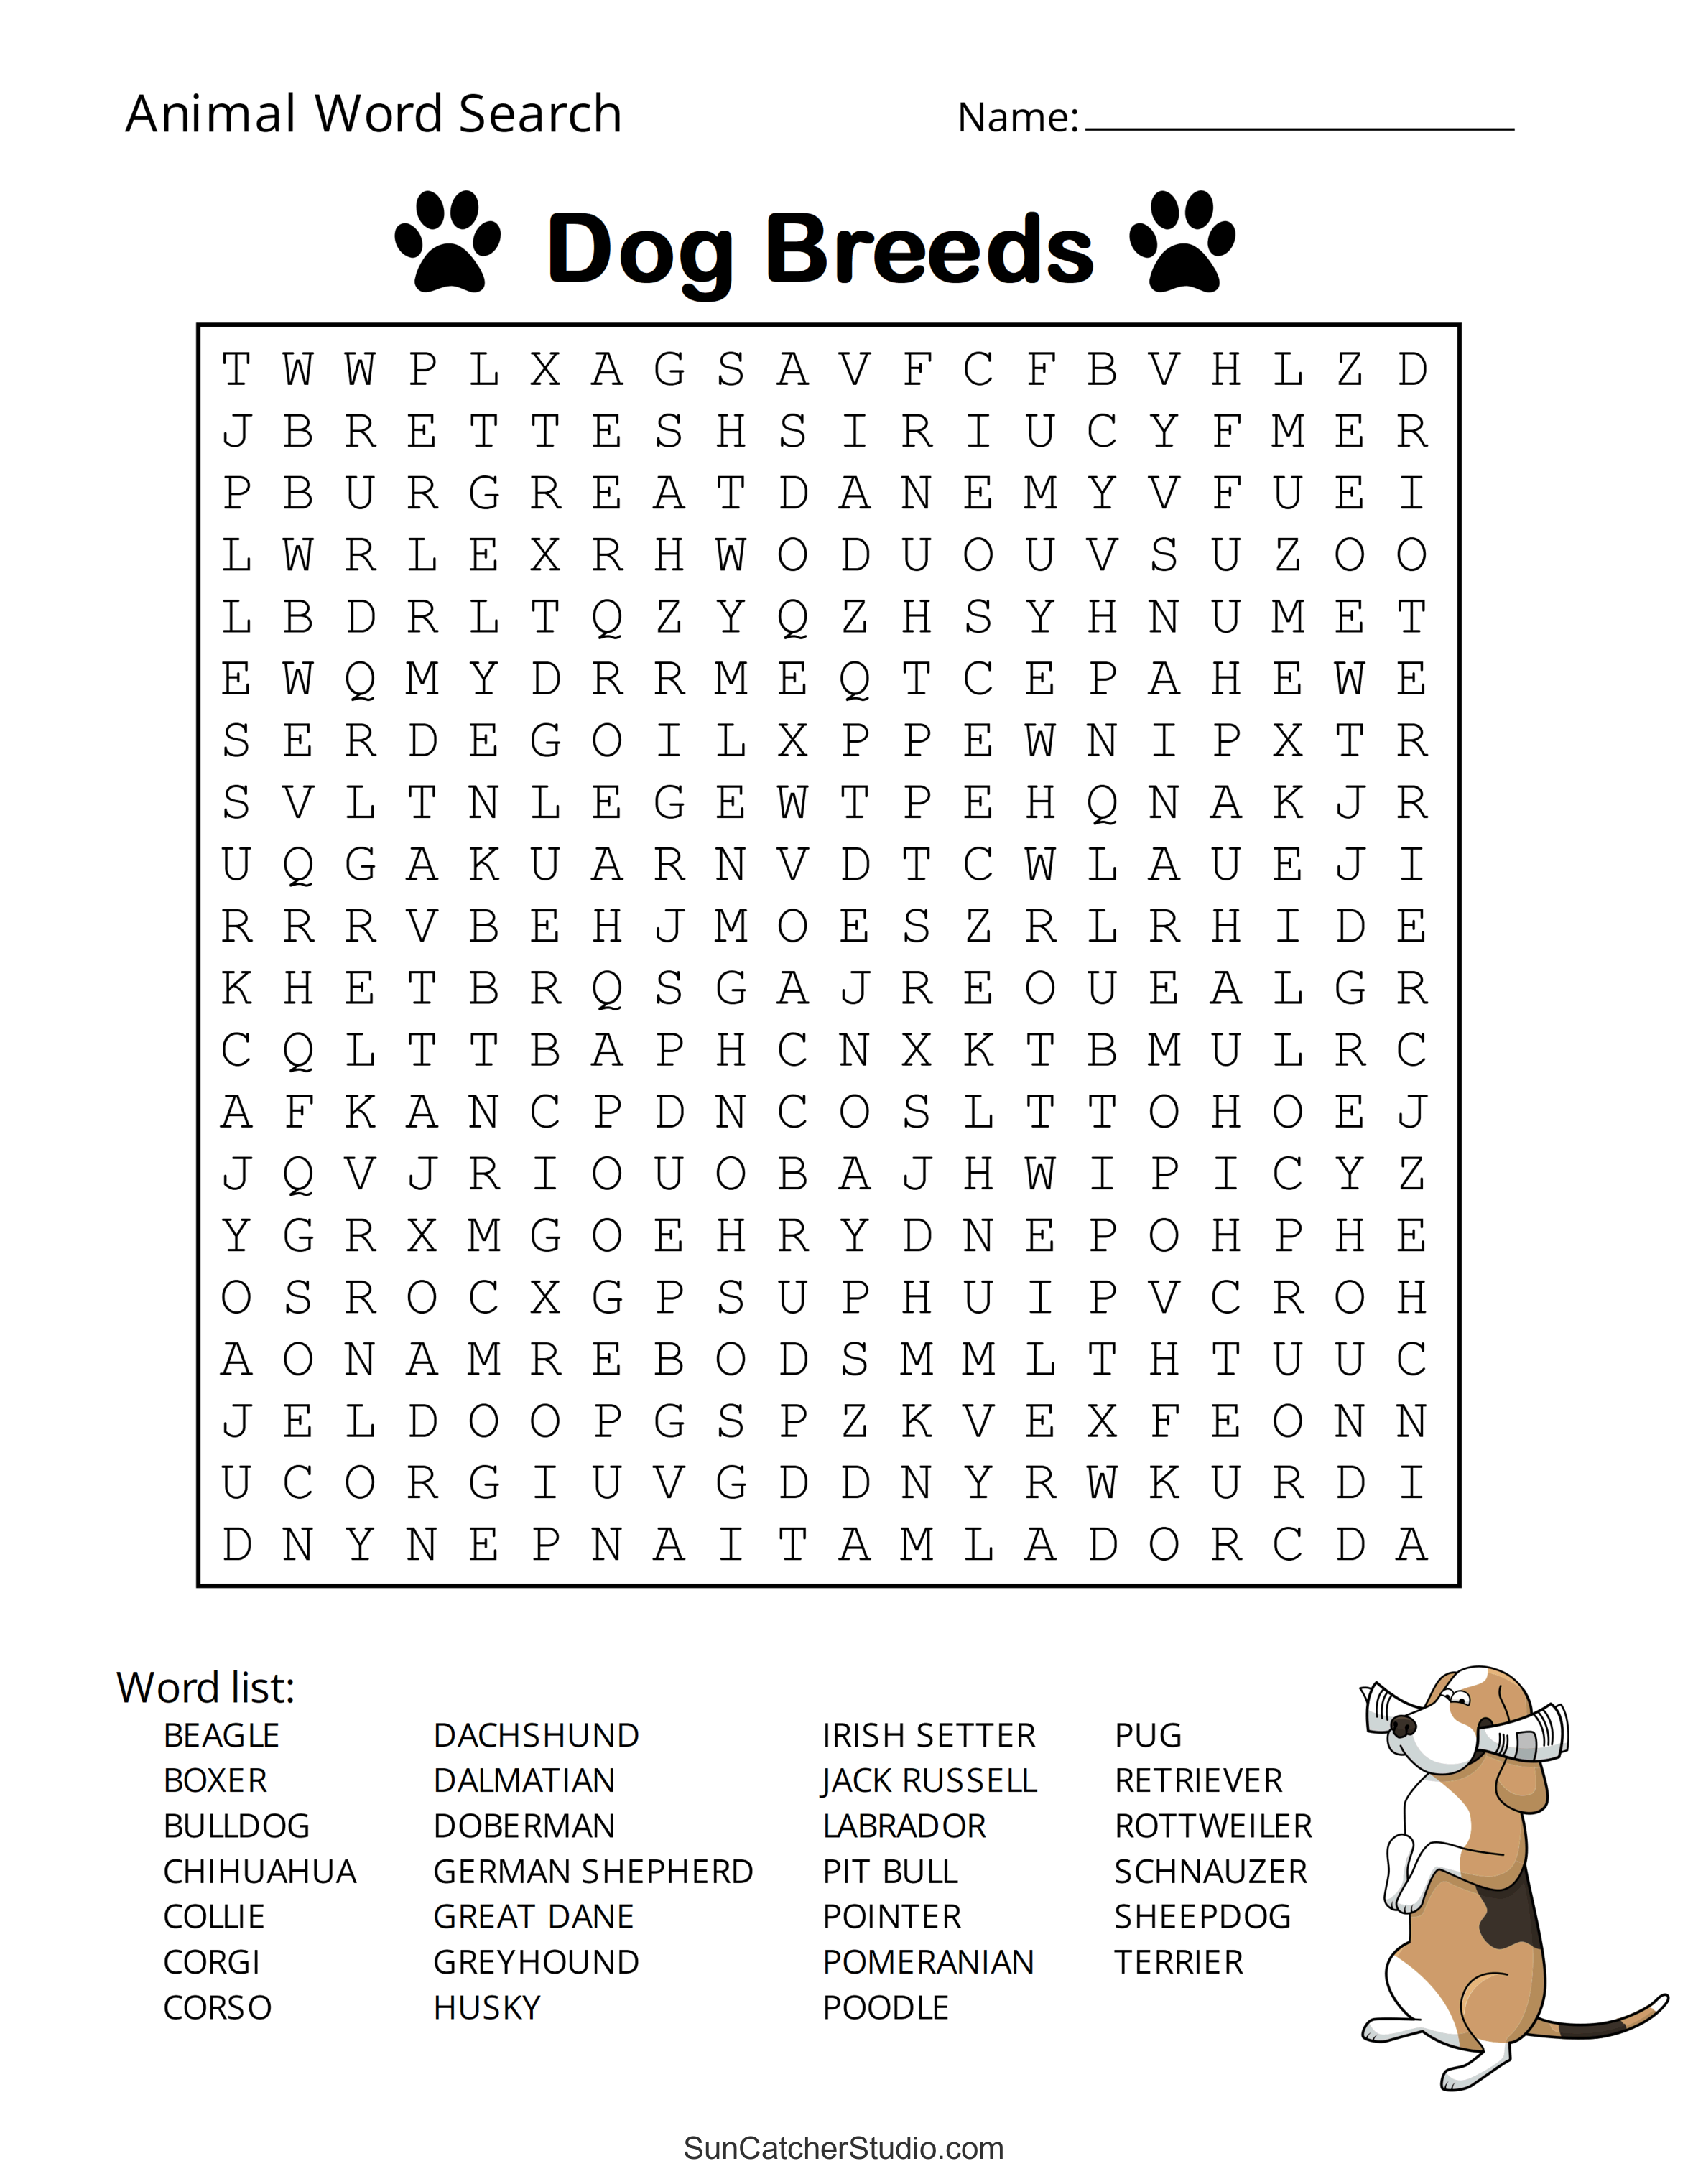 Animal Word Search Free Printable Dog Pet Dinosaur Puzzles DIY 